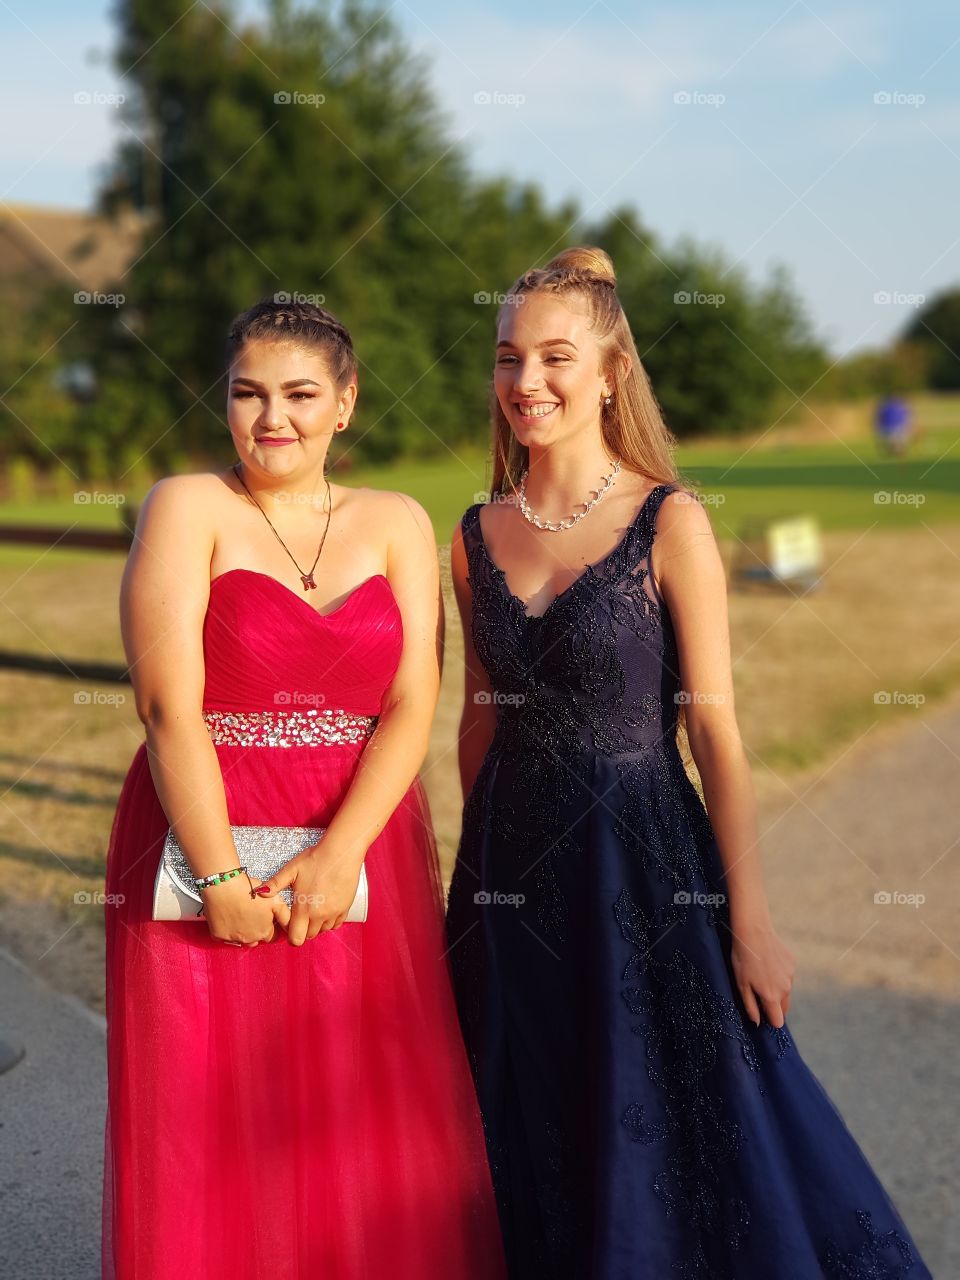 2 girls in prom dresses